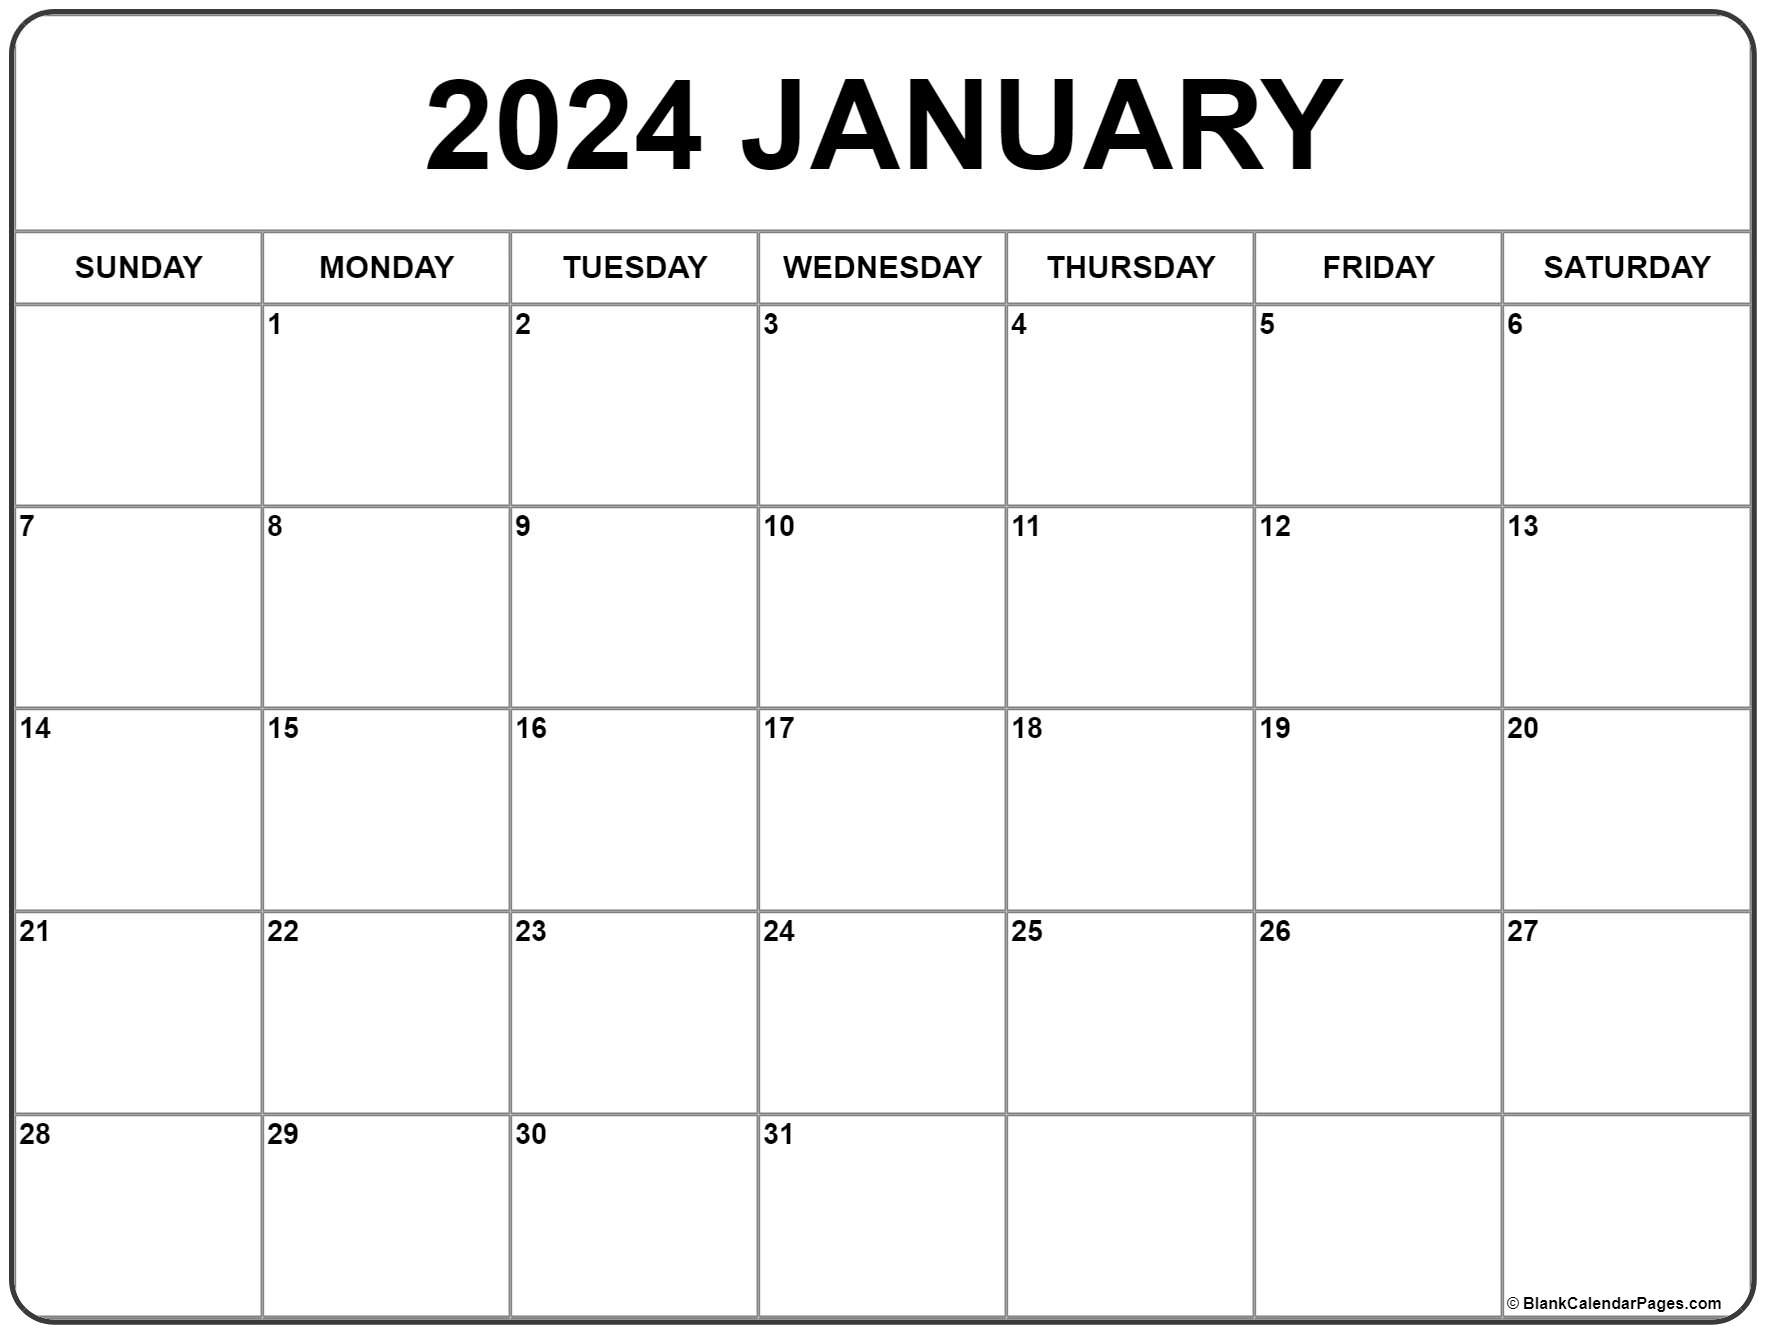 January 2024 Calendar | Free Printable Calendar for Blank Calendar Template January 2024 Printable